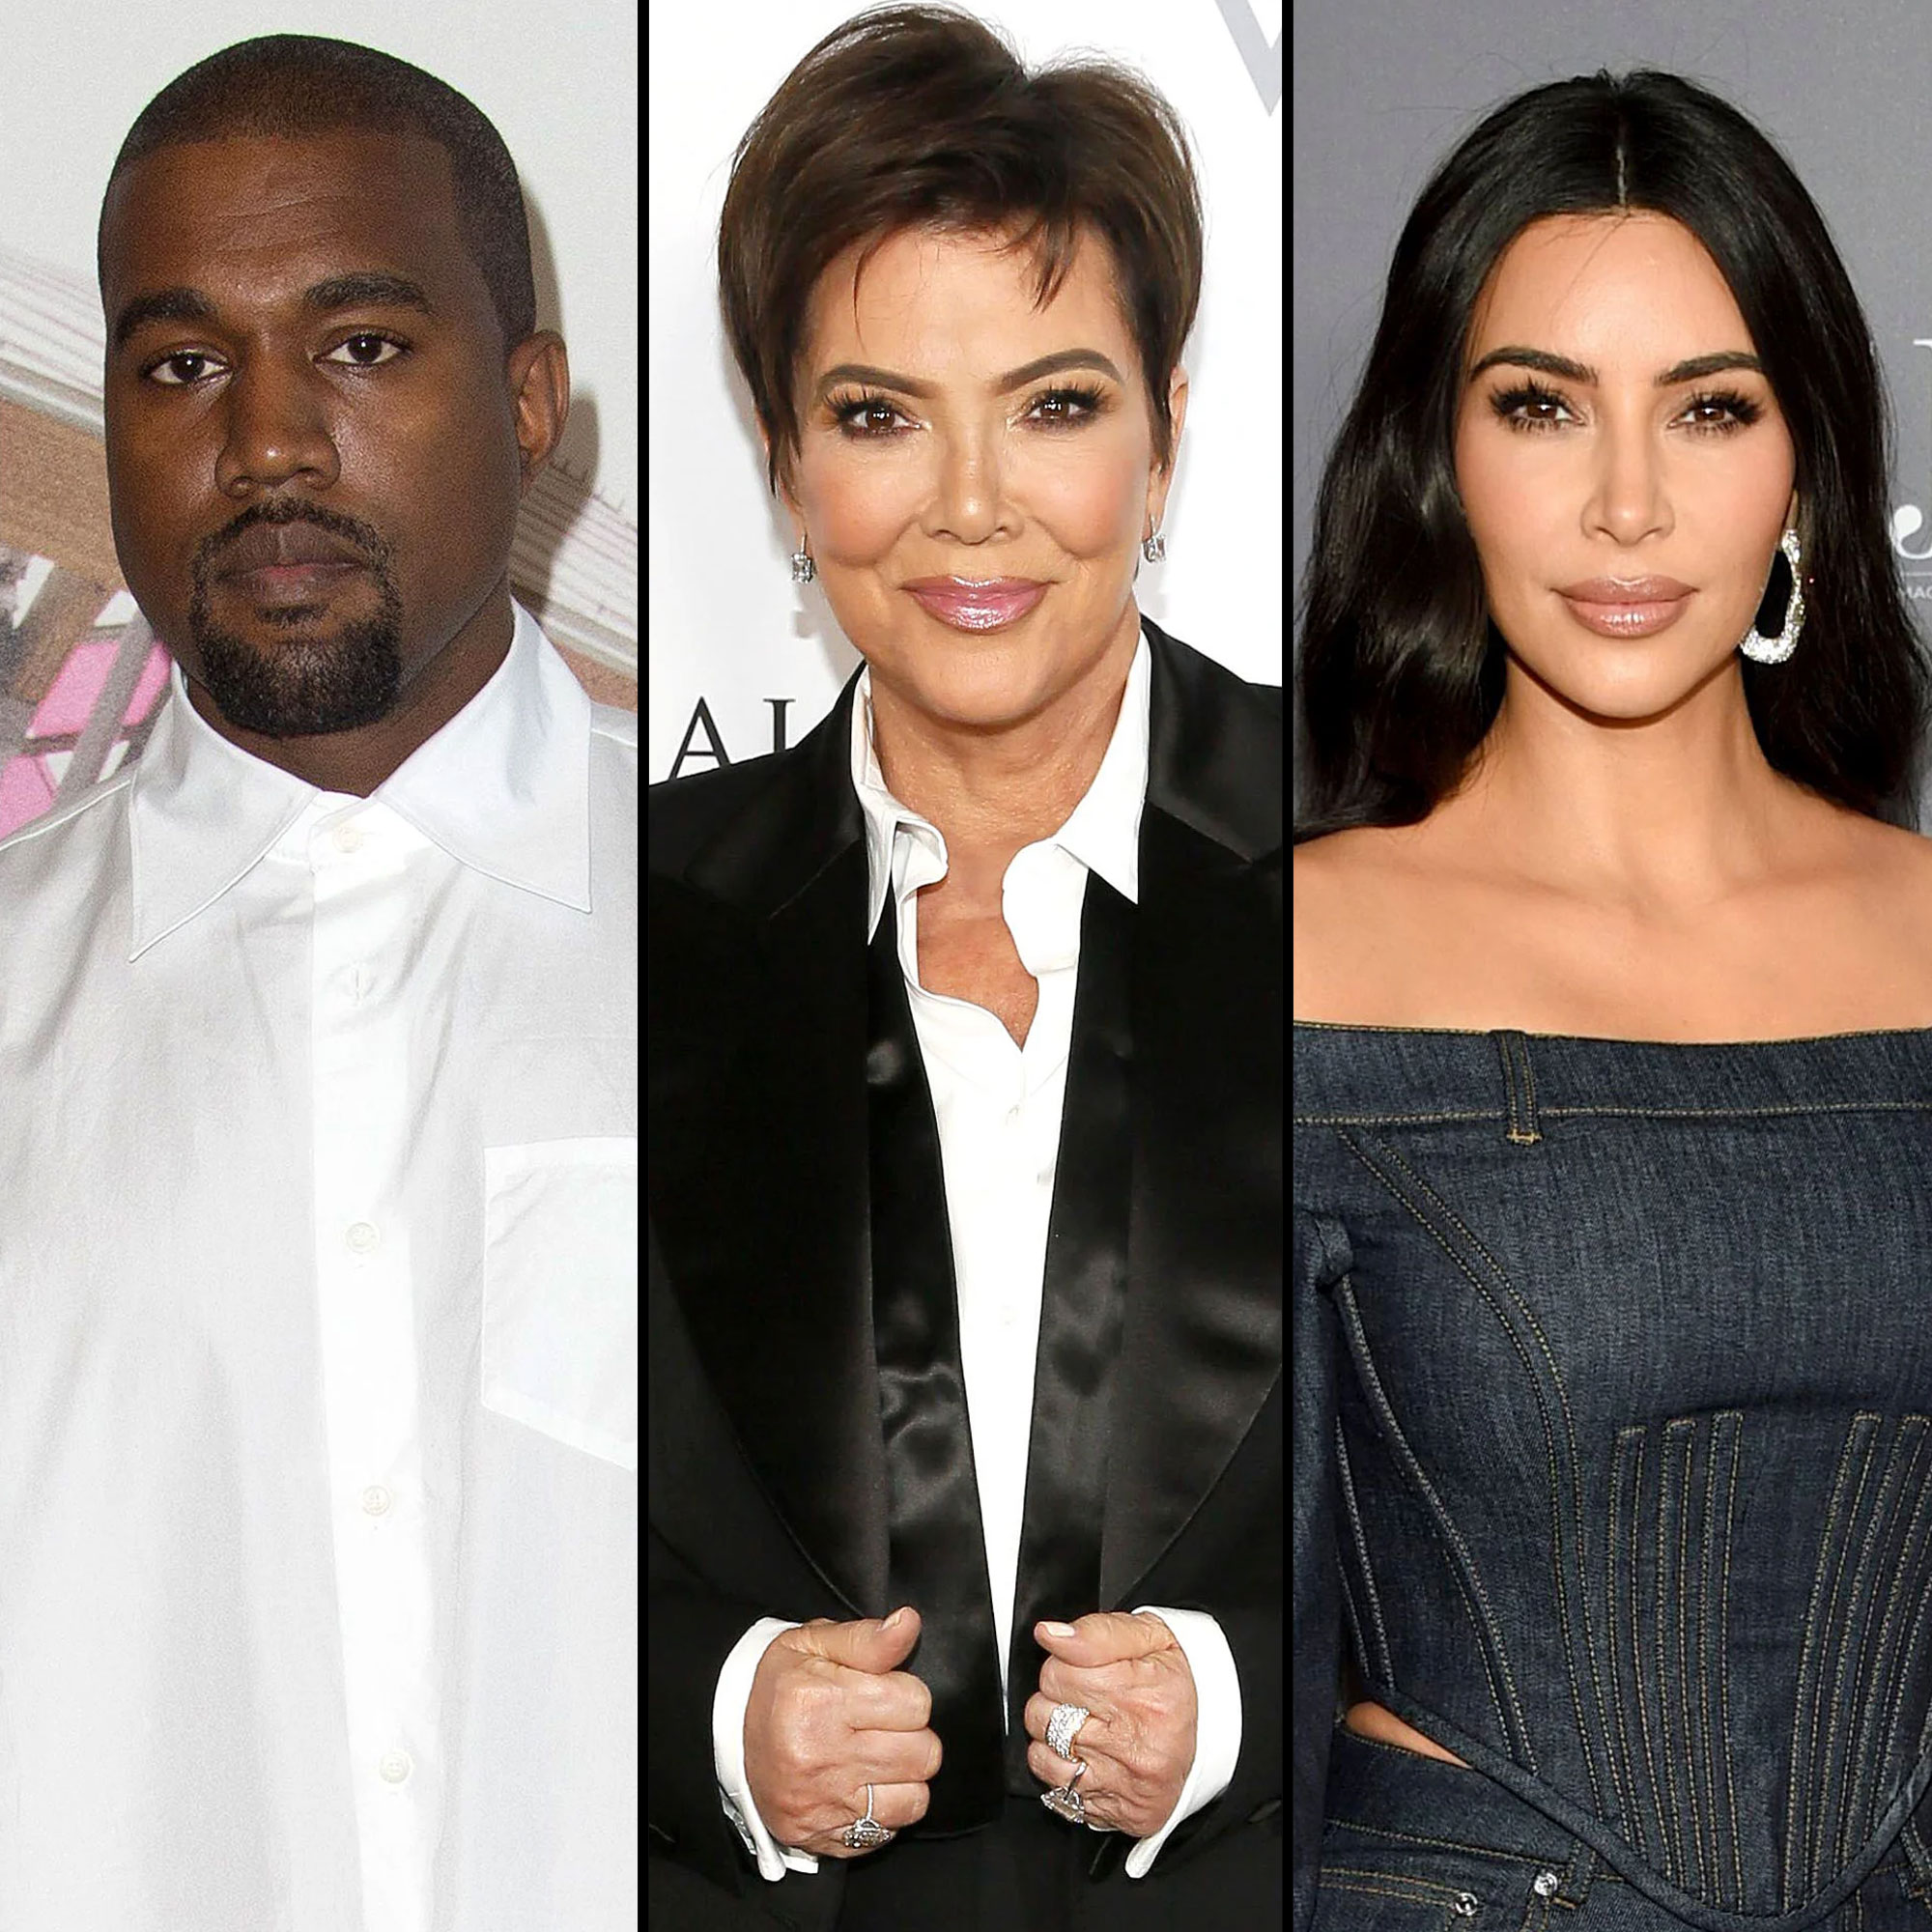 Kanya Sex Movie Download - Kanye West Calls Out Kris Jenner, Claims Porn 'Destroyed' Family